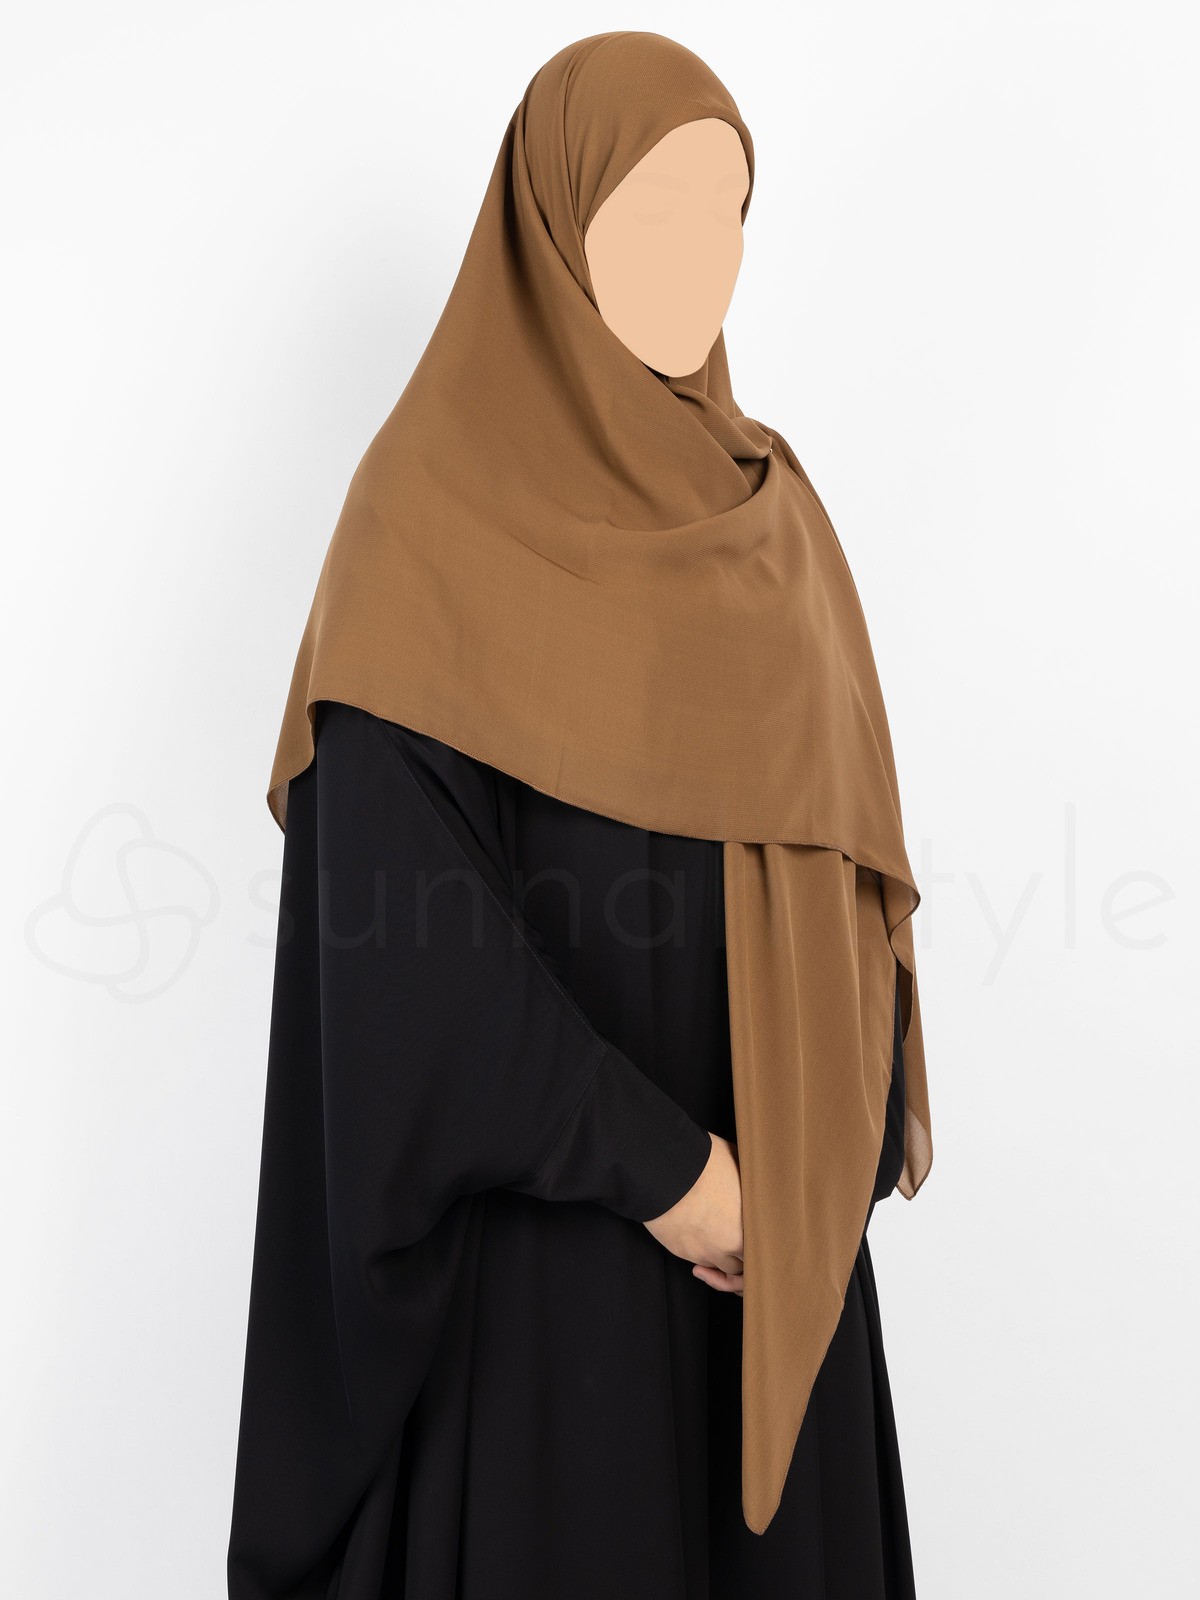 Sunnah Style Essentials Square Hijab - Large (Caramel)